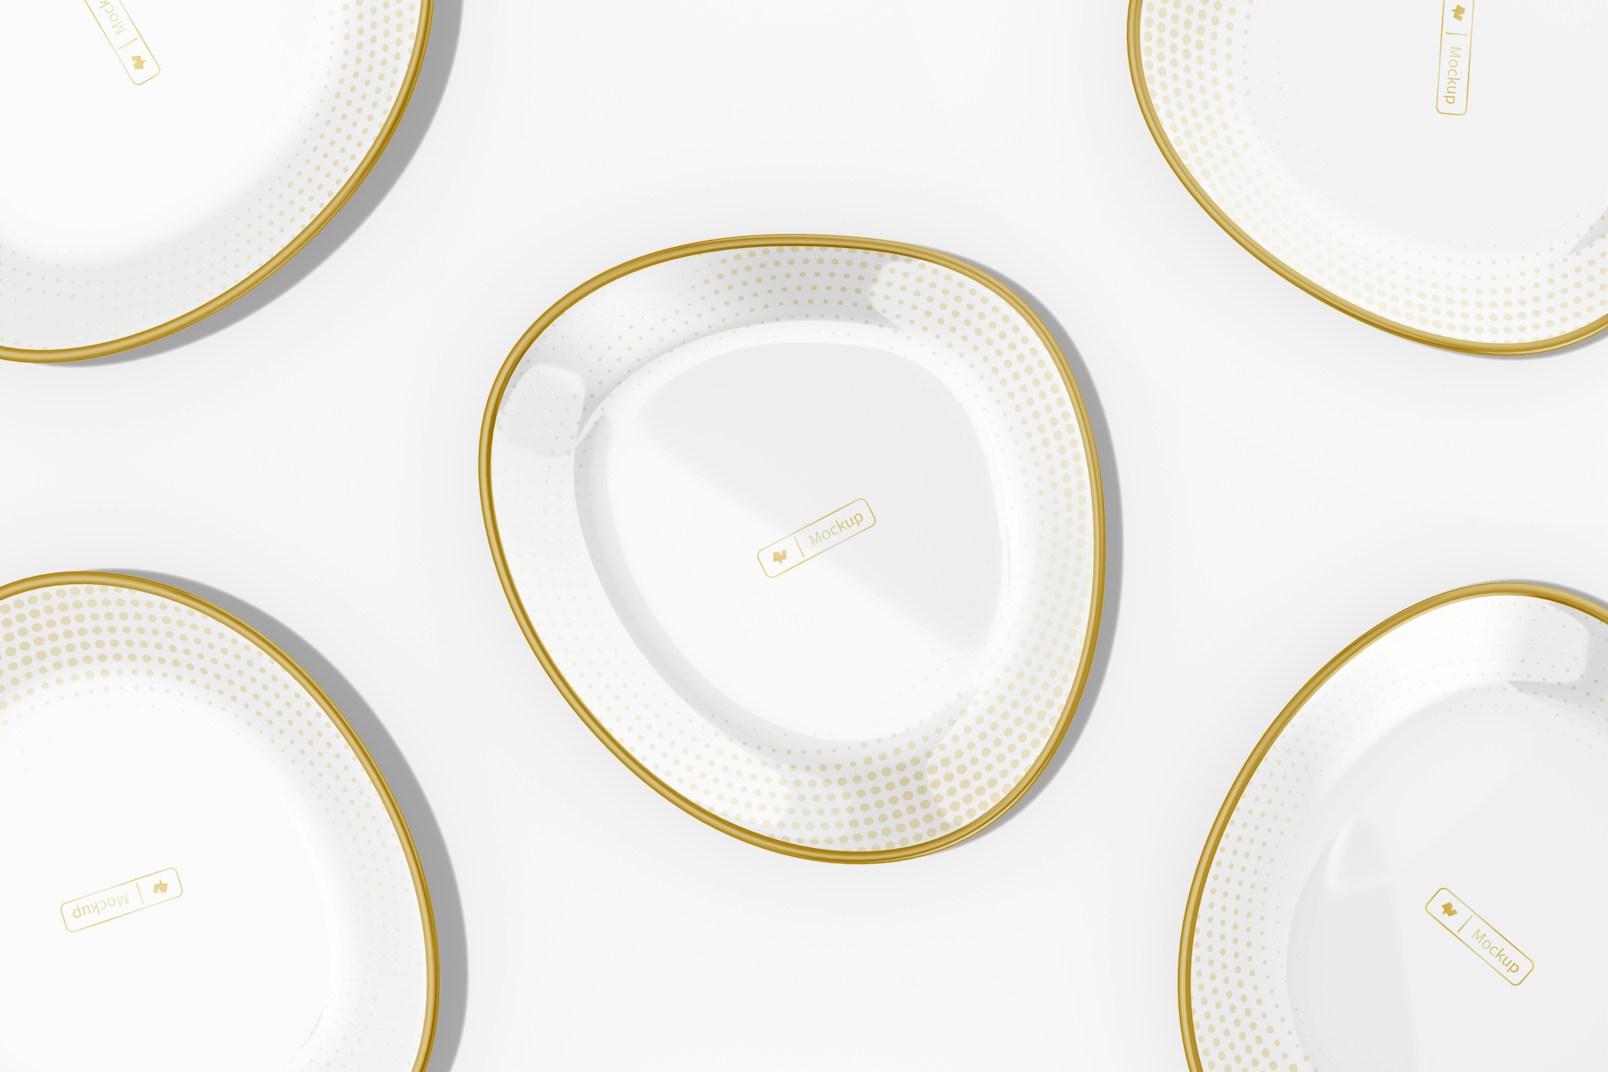 Ceramic Luxury Plates Mockup, Top View